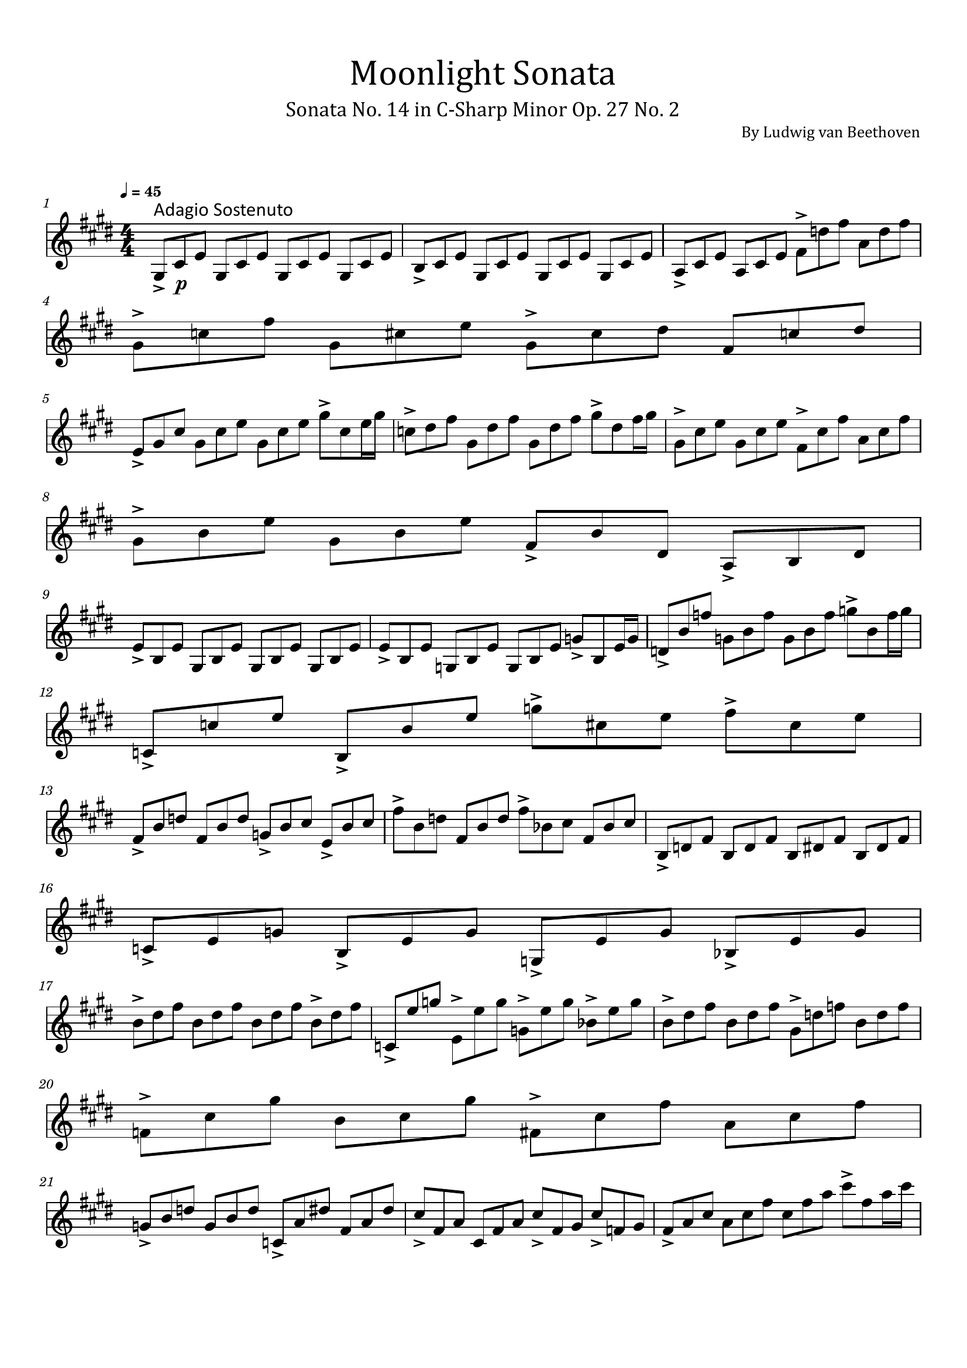 Ludwig van Beethoven - Moonlight Sonata (Sonata No. 14 in C-Sharp Op. 27 No. 2 - violin solo) Sheets by